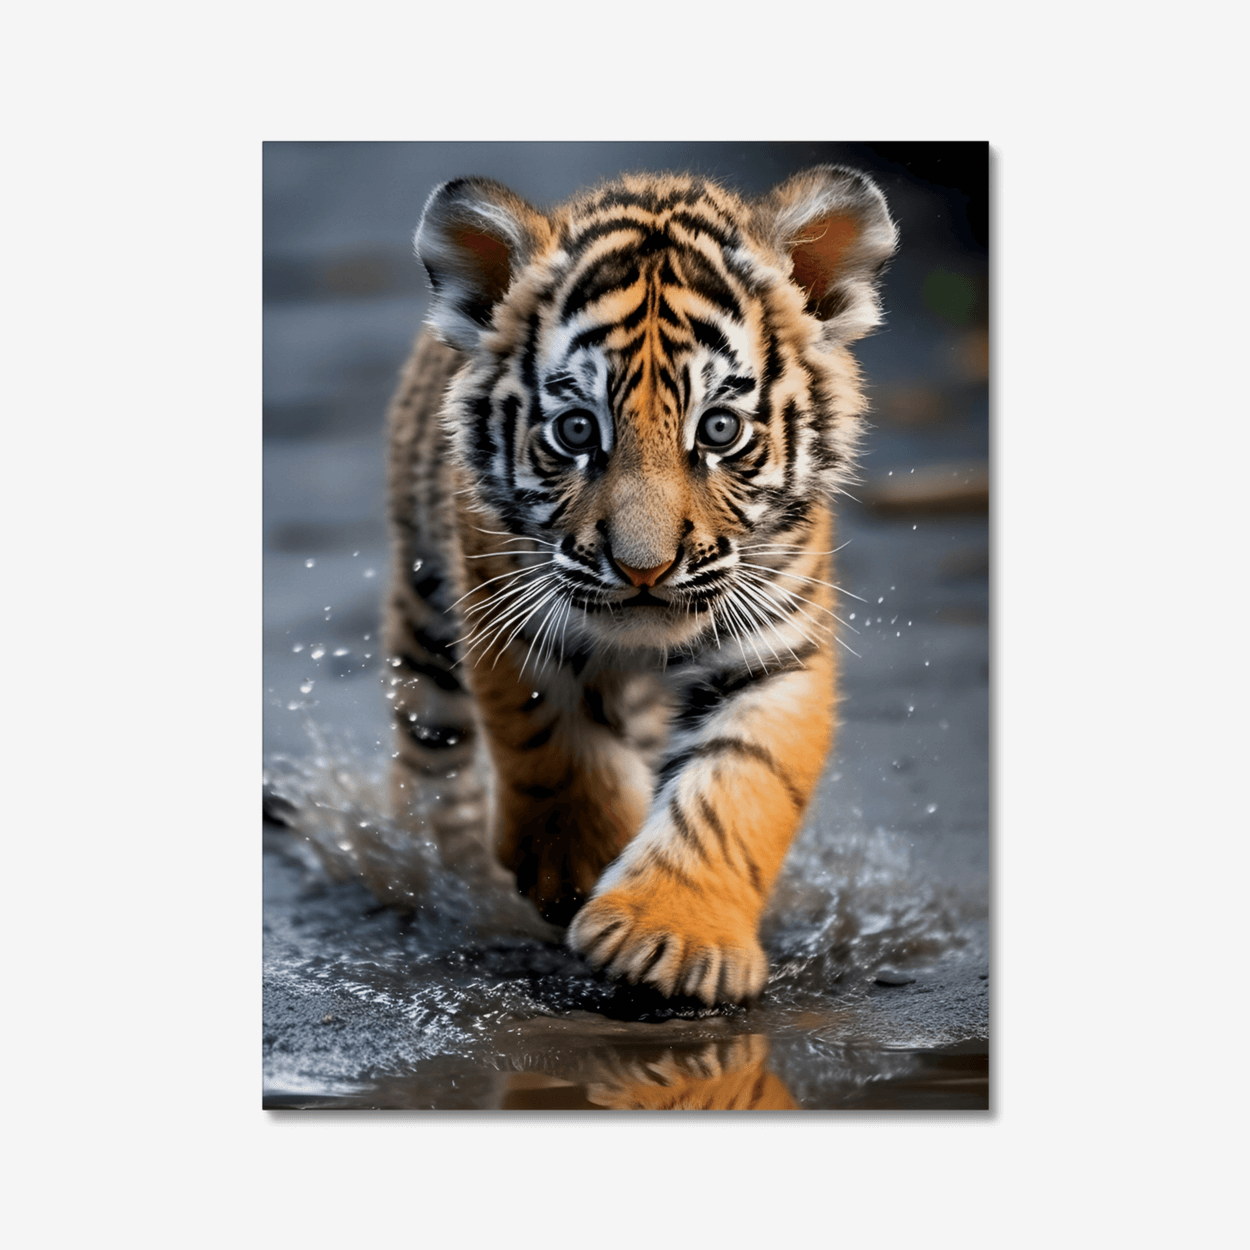 Baby tiger